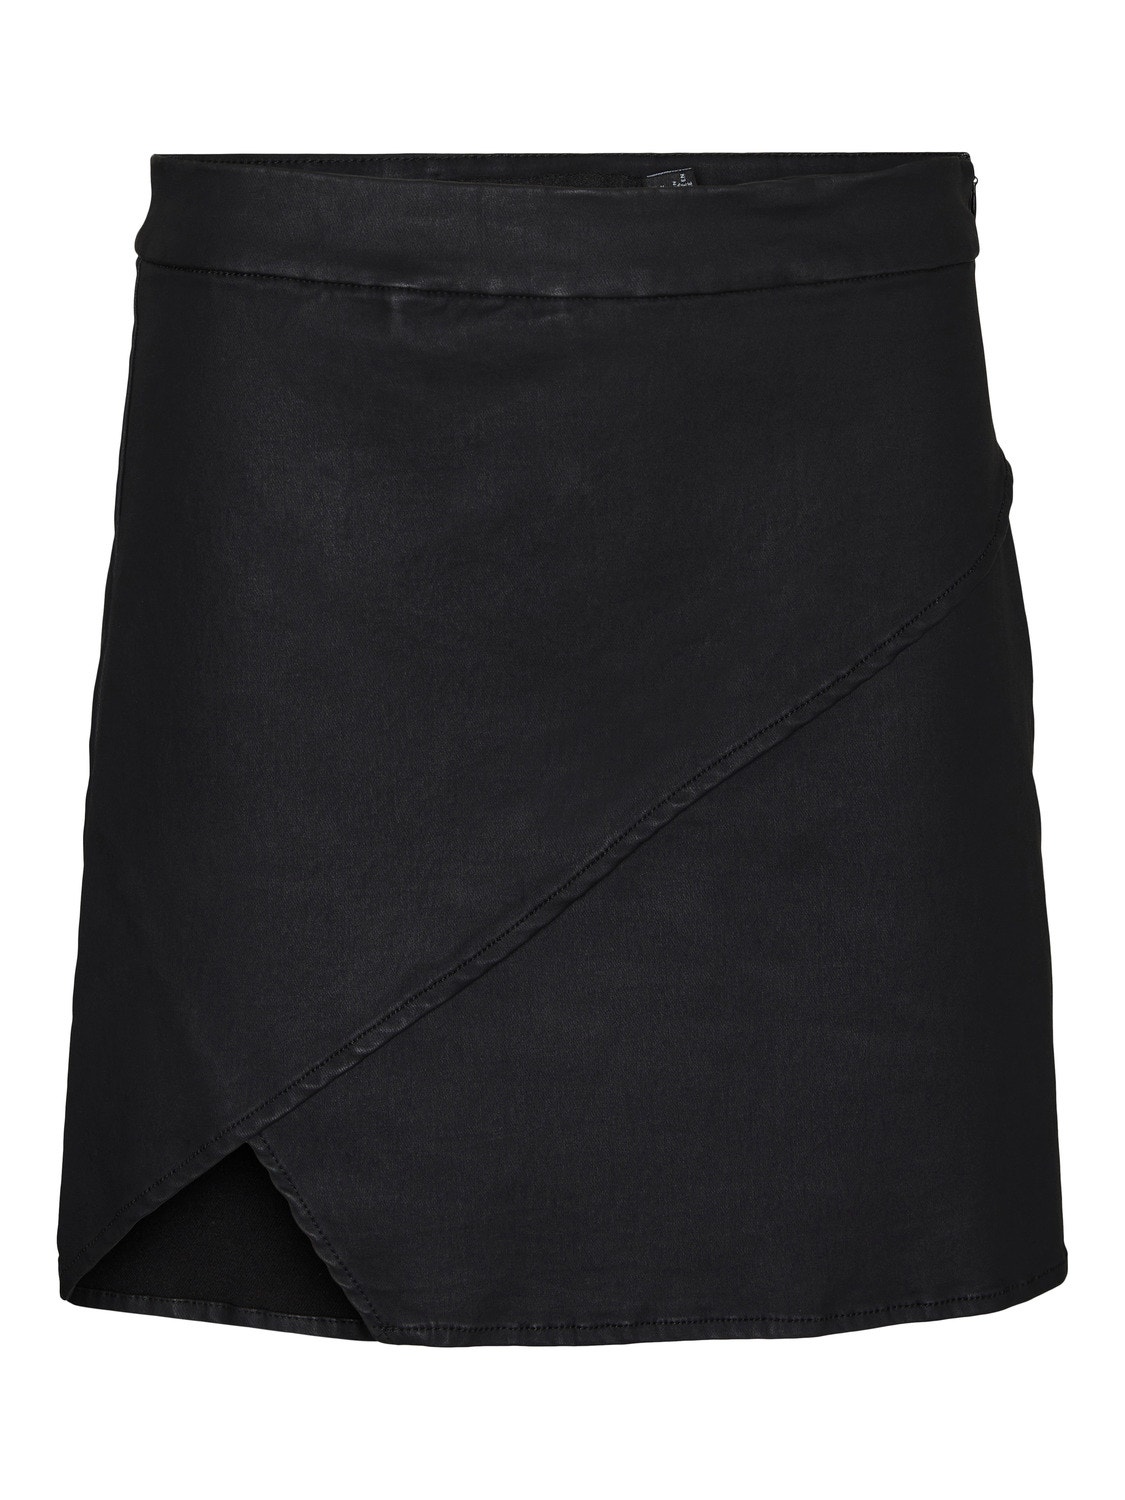 Vero Moda VMMARLIE Mini skirt -Black - 10302199